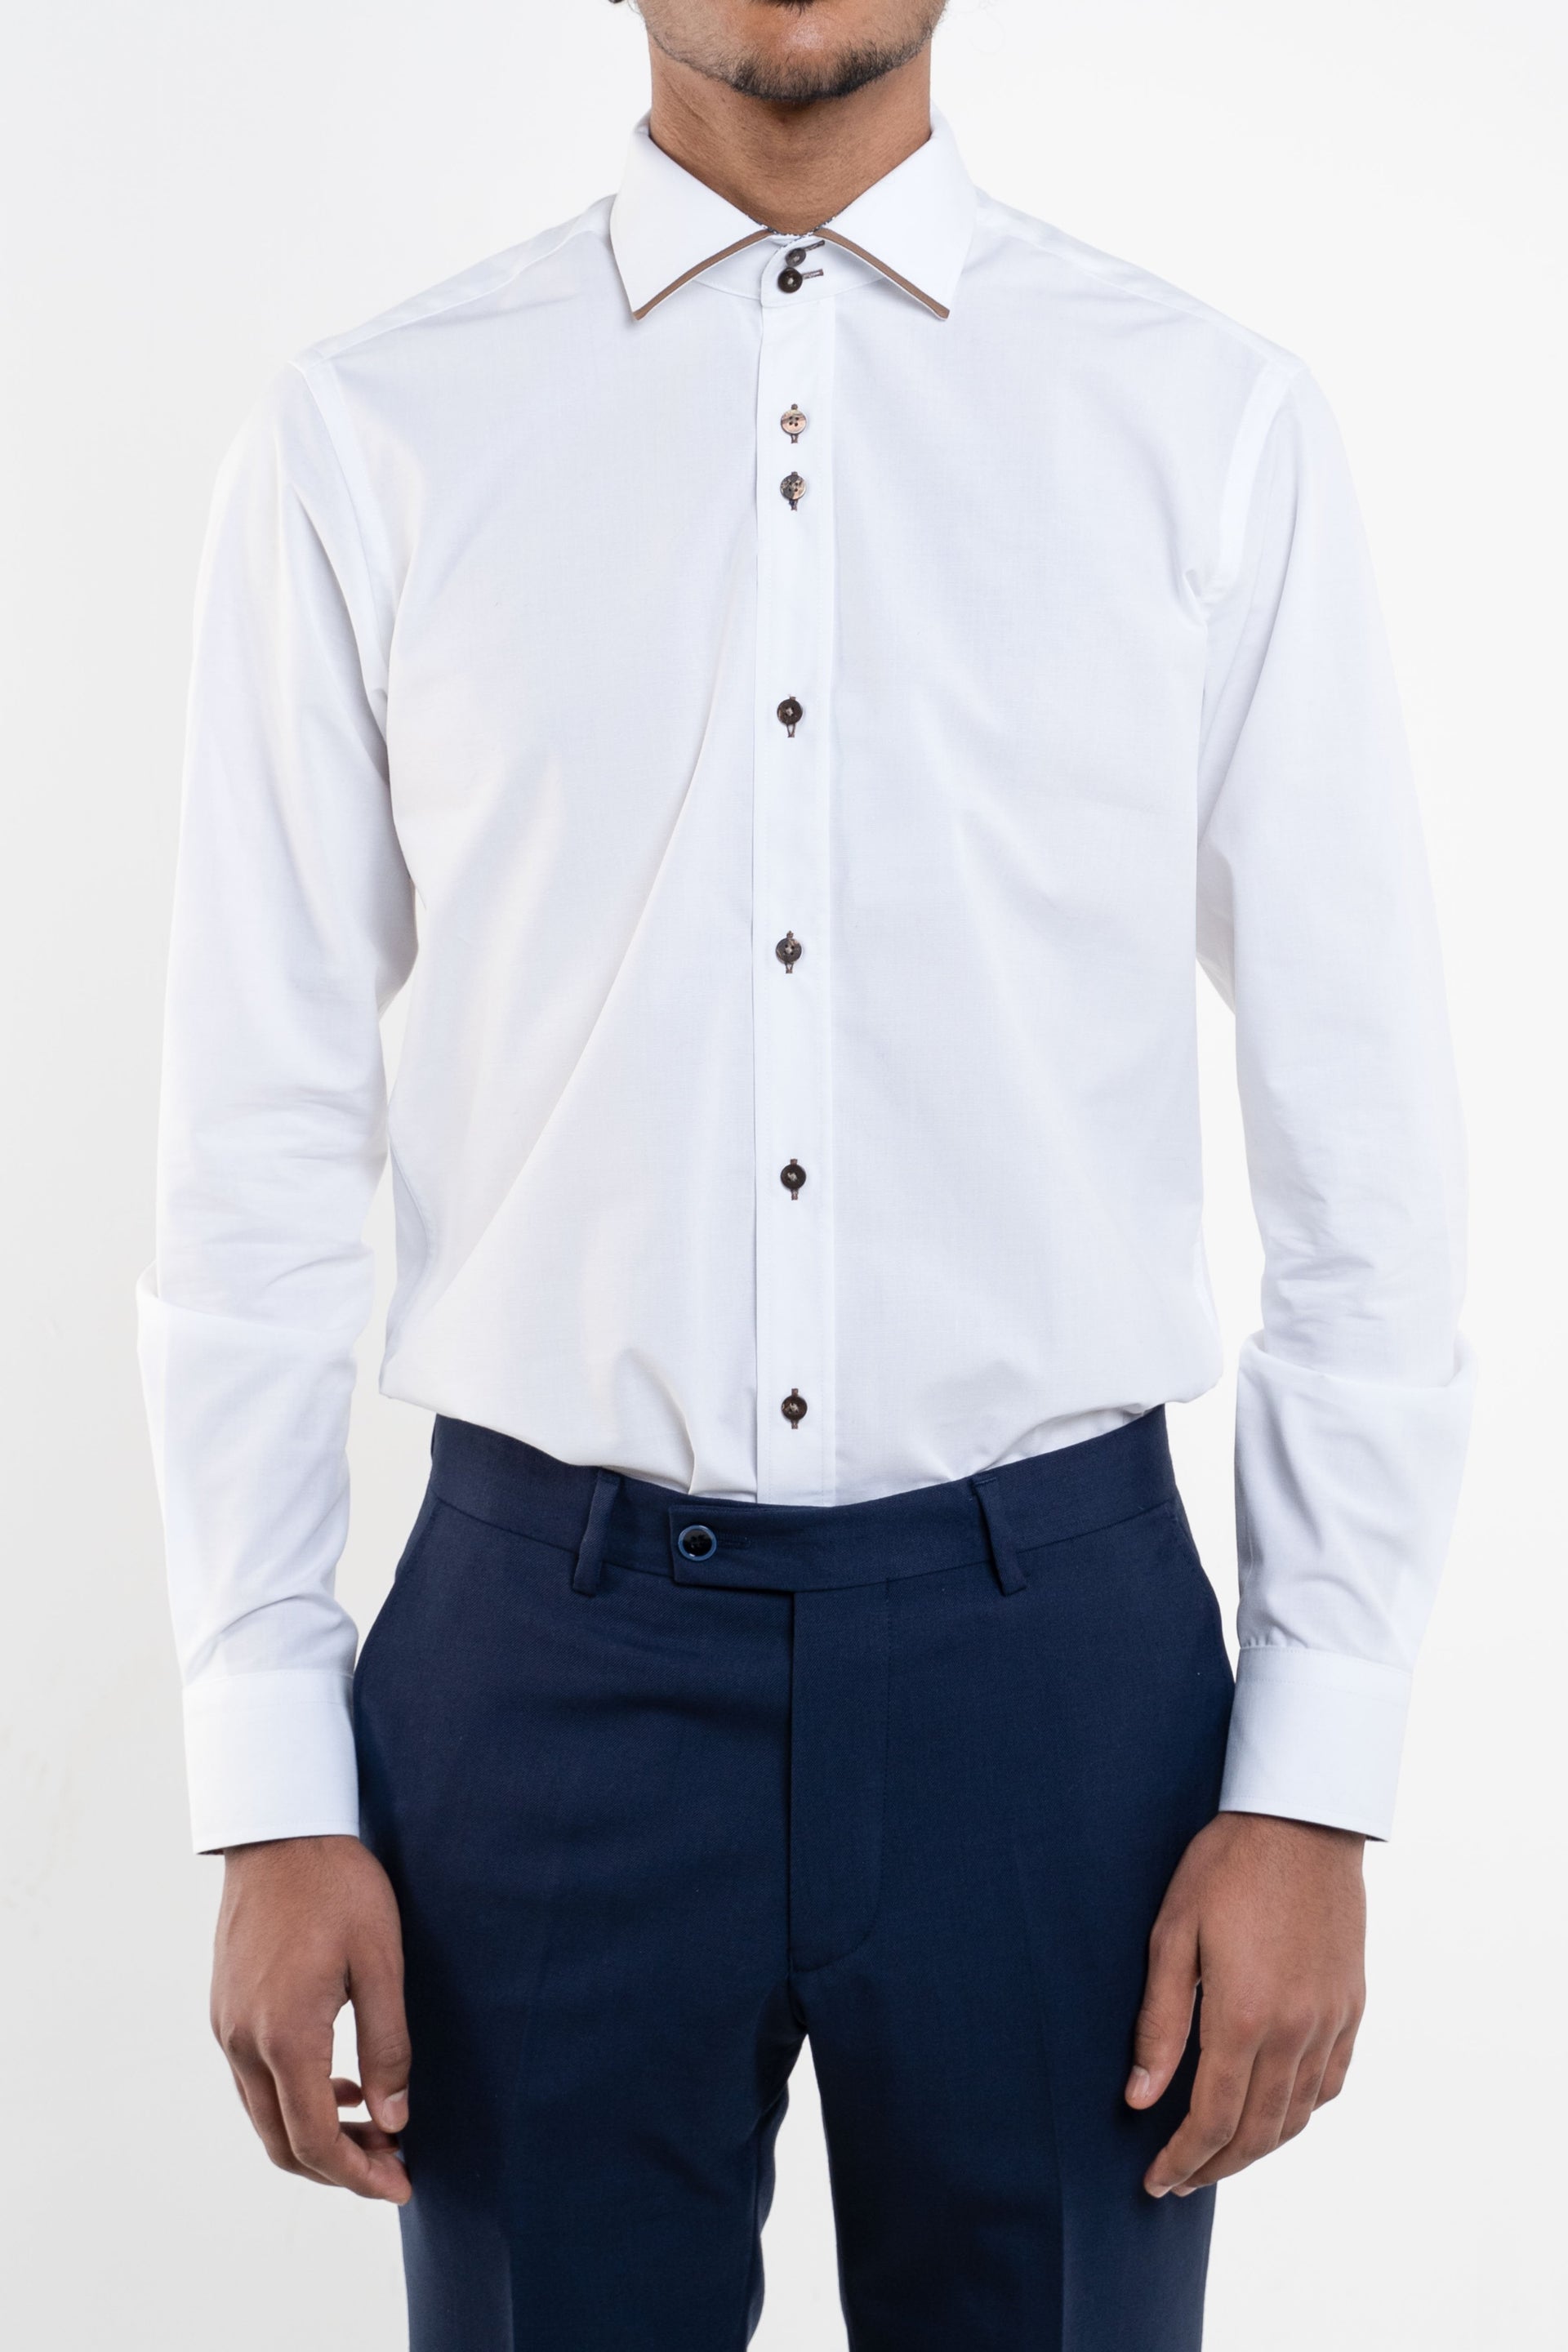 Guide London White Shirt With Tan Collar Tipping – Master Debonair